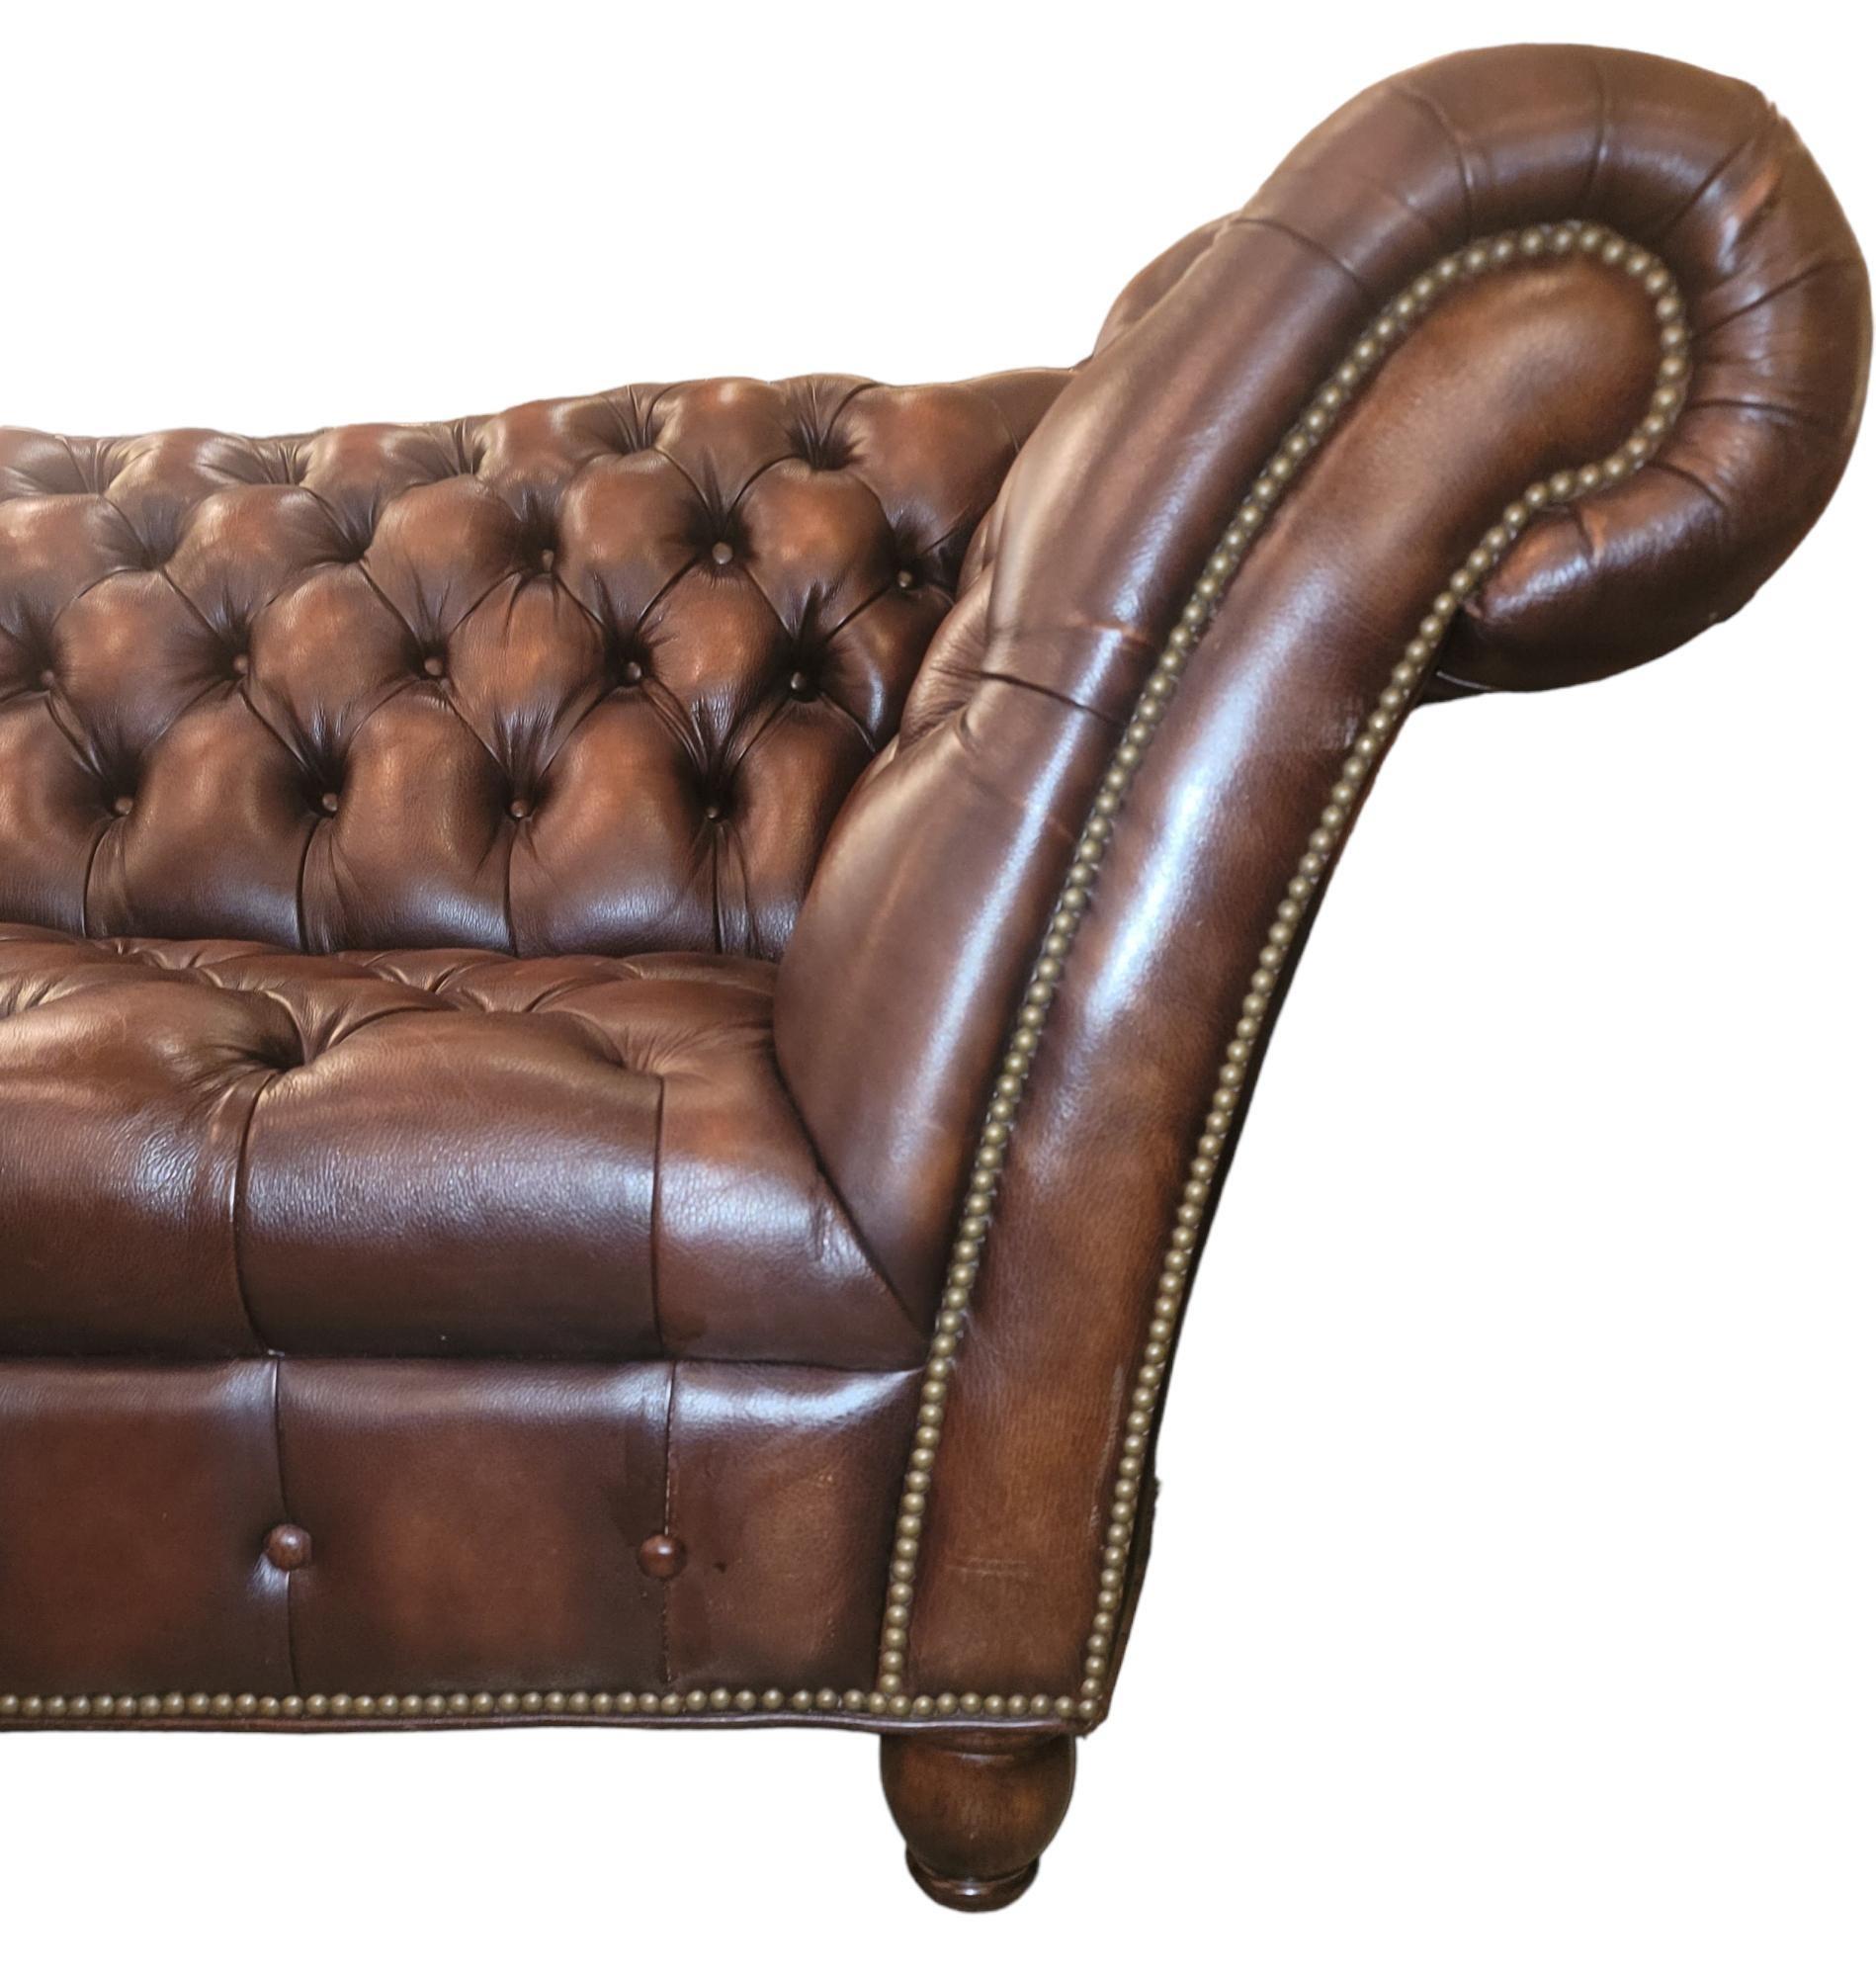 1940s style sofa